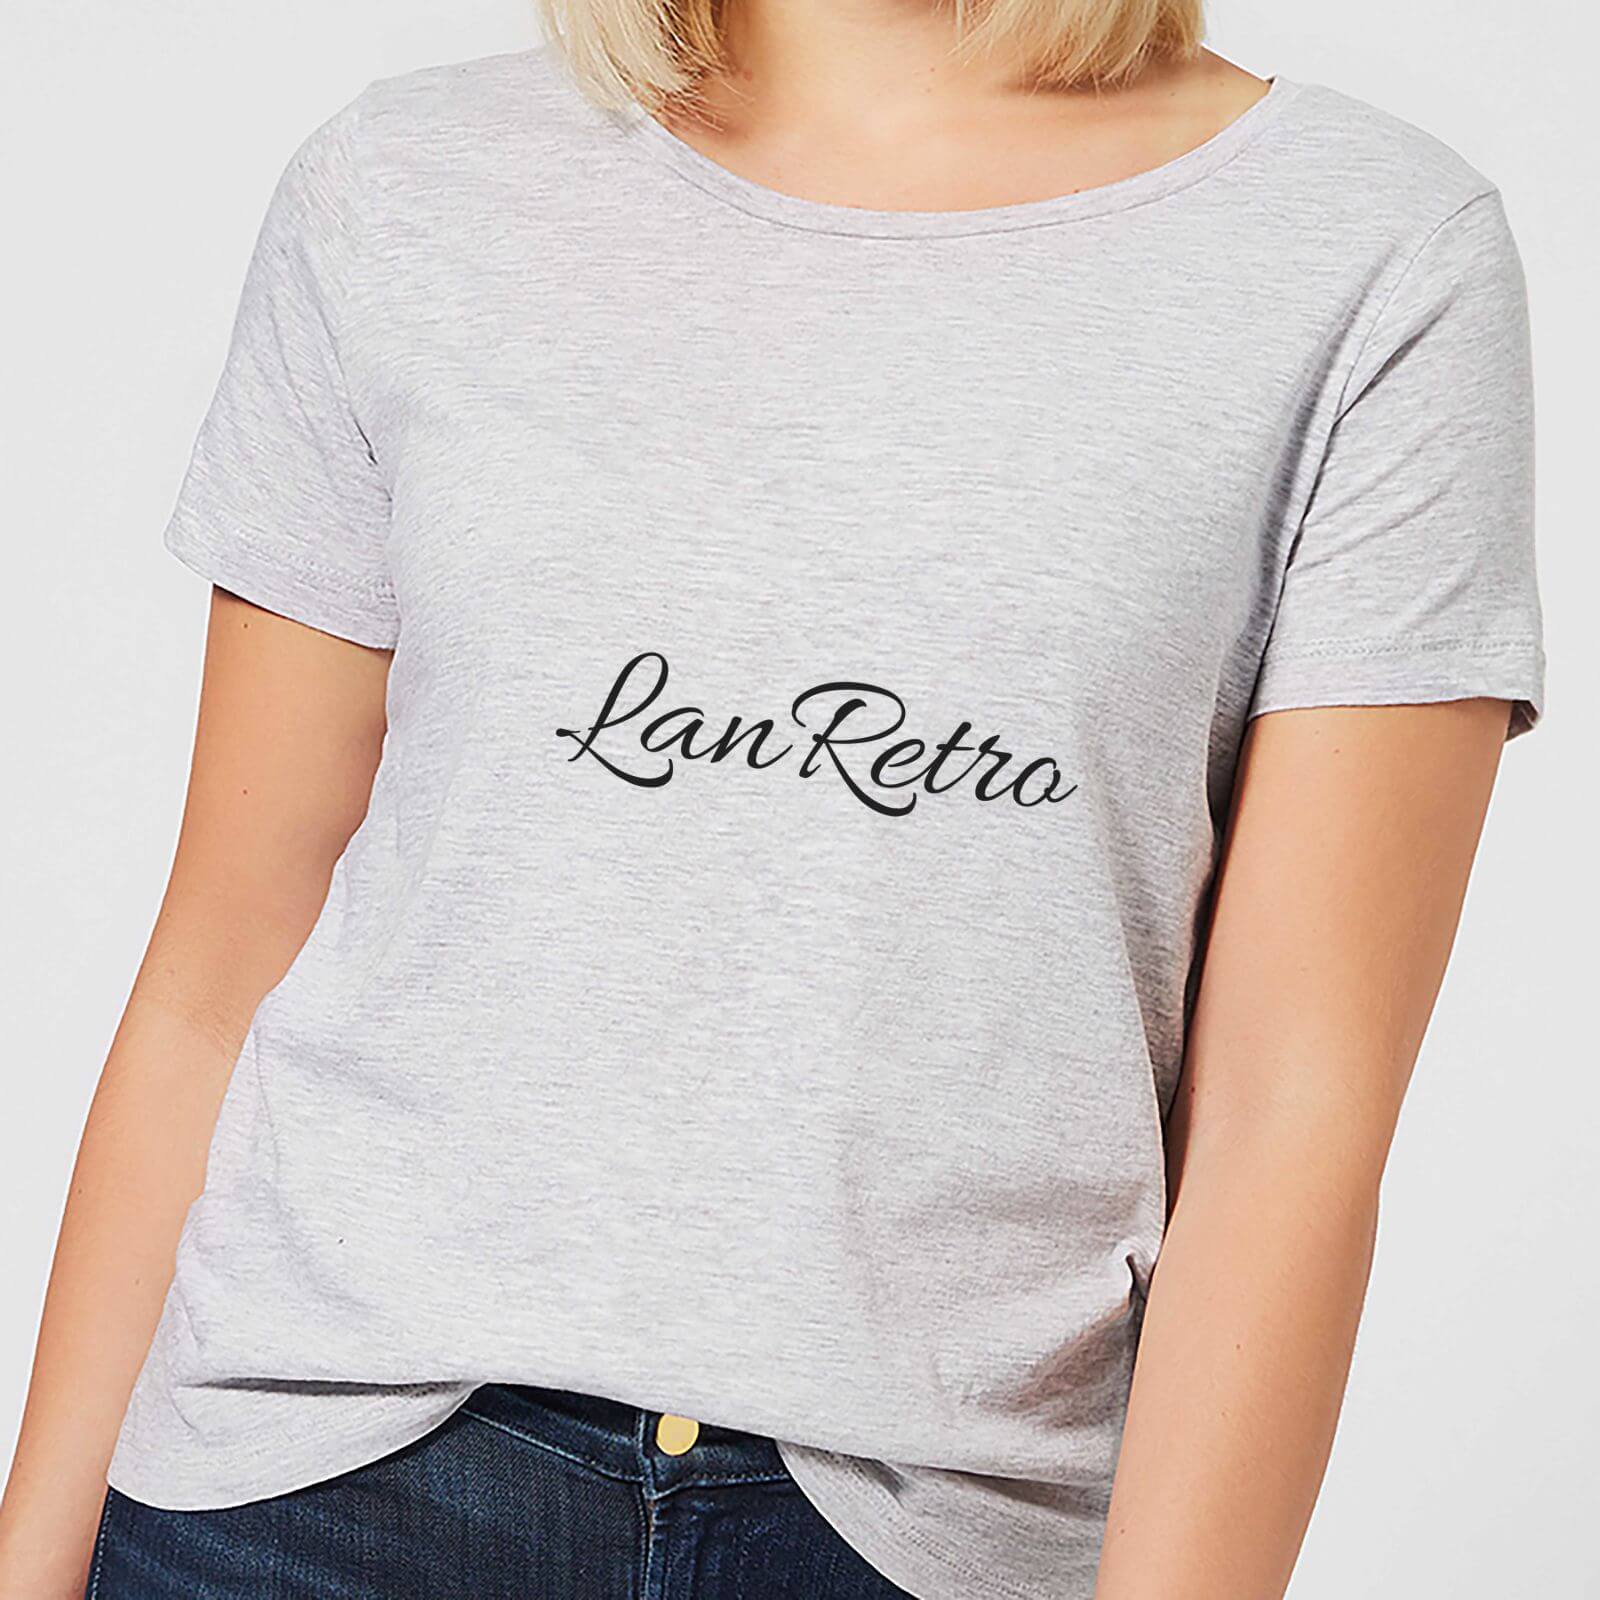 Lanre Retro Lanretro Dark Women's T-Shirt - Grey - S - Grey